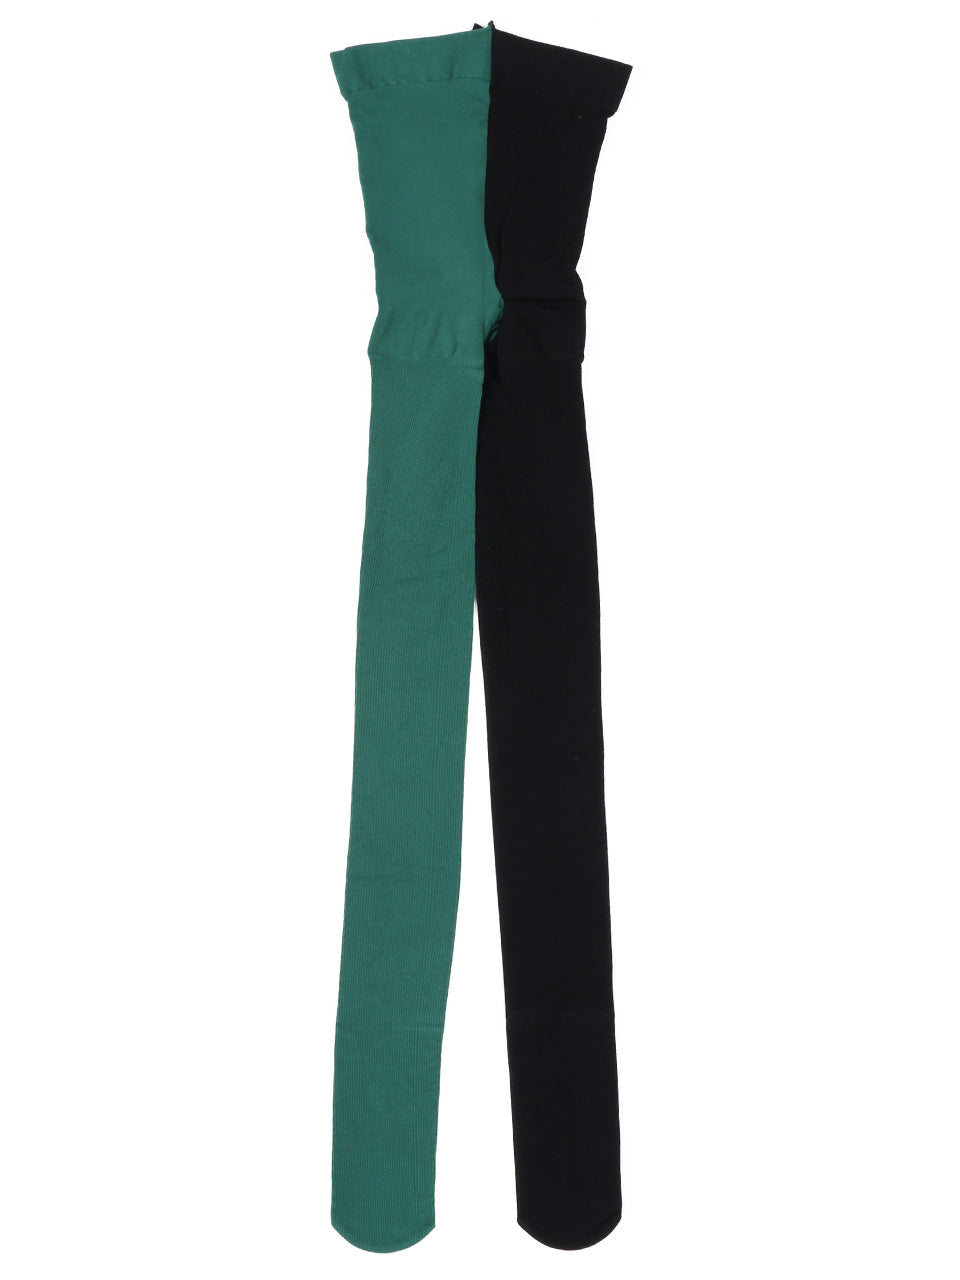 Slim Fit Ribbed Tights (green/black)